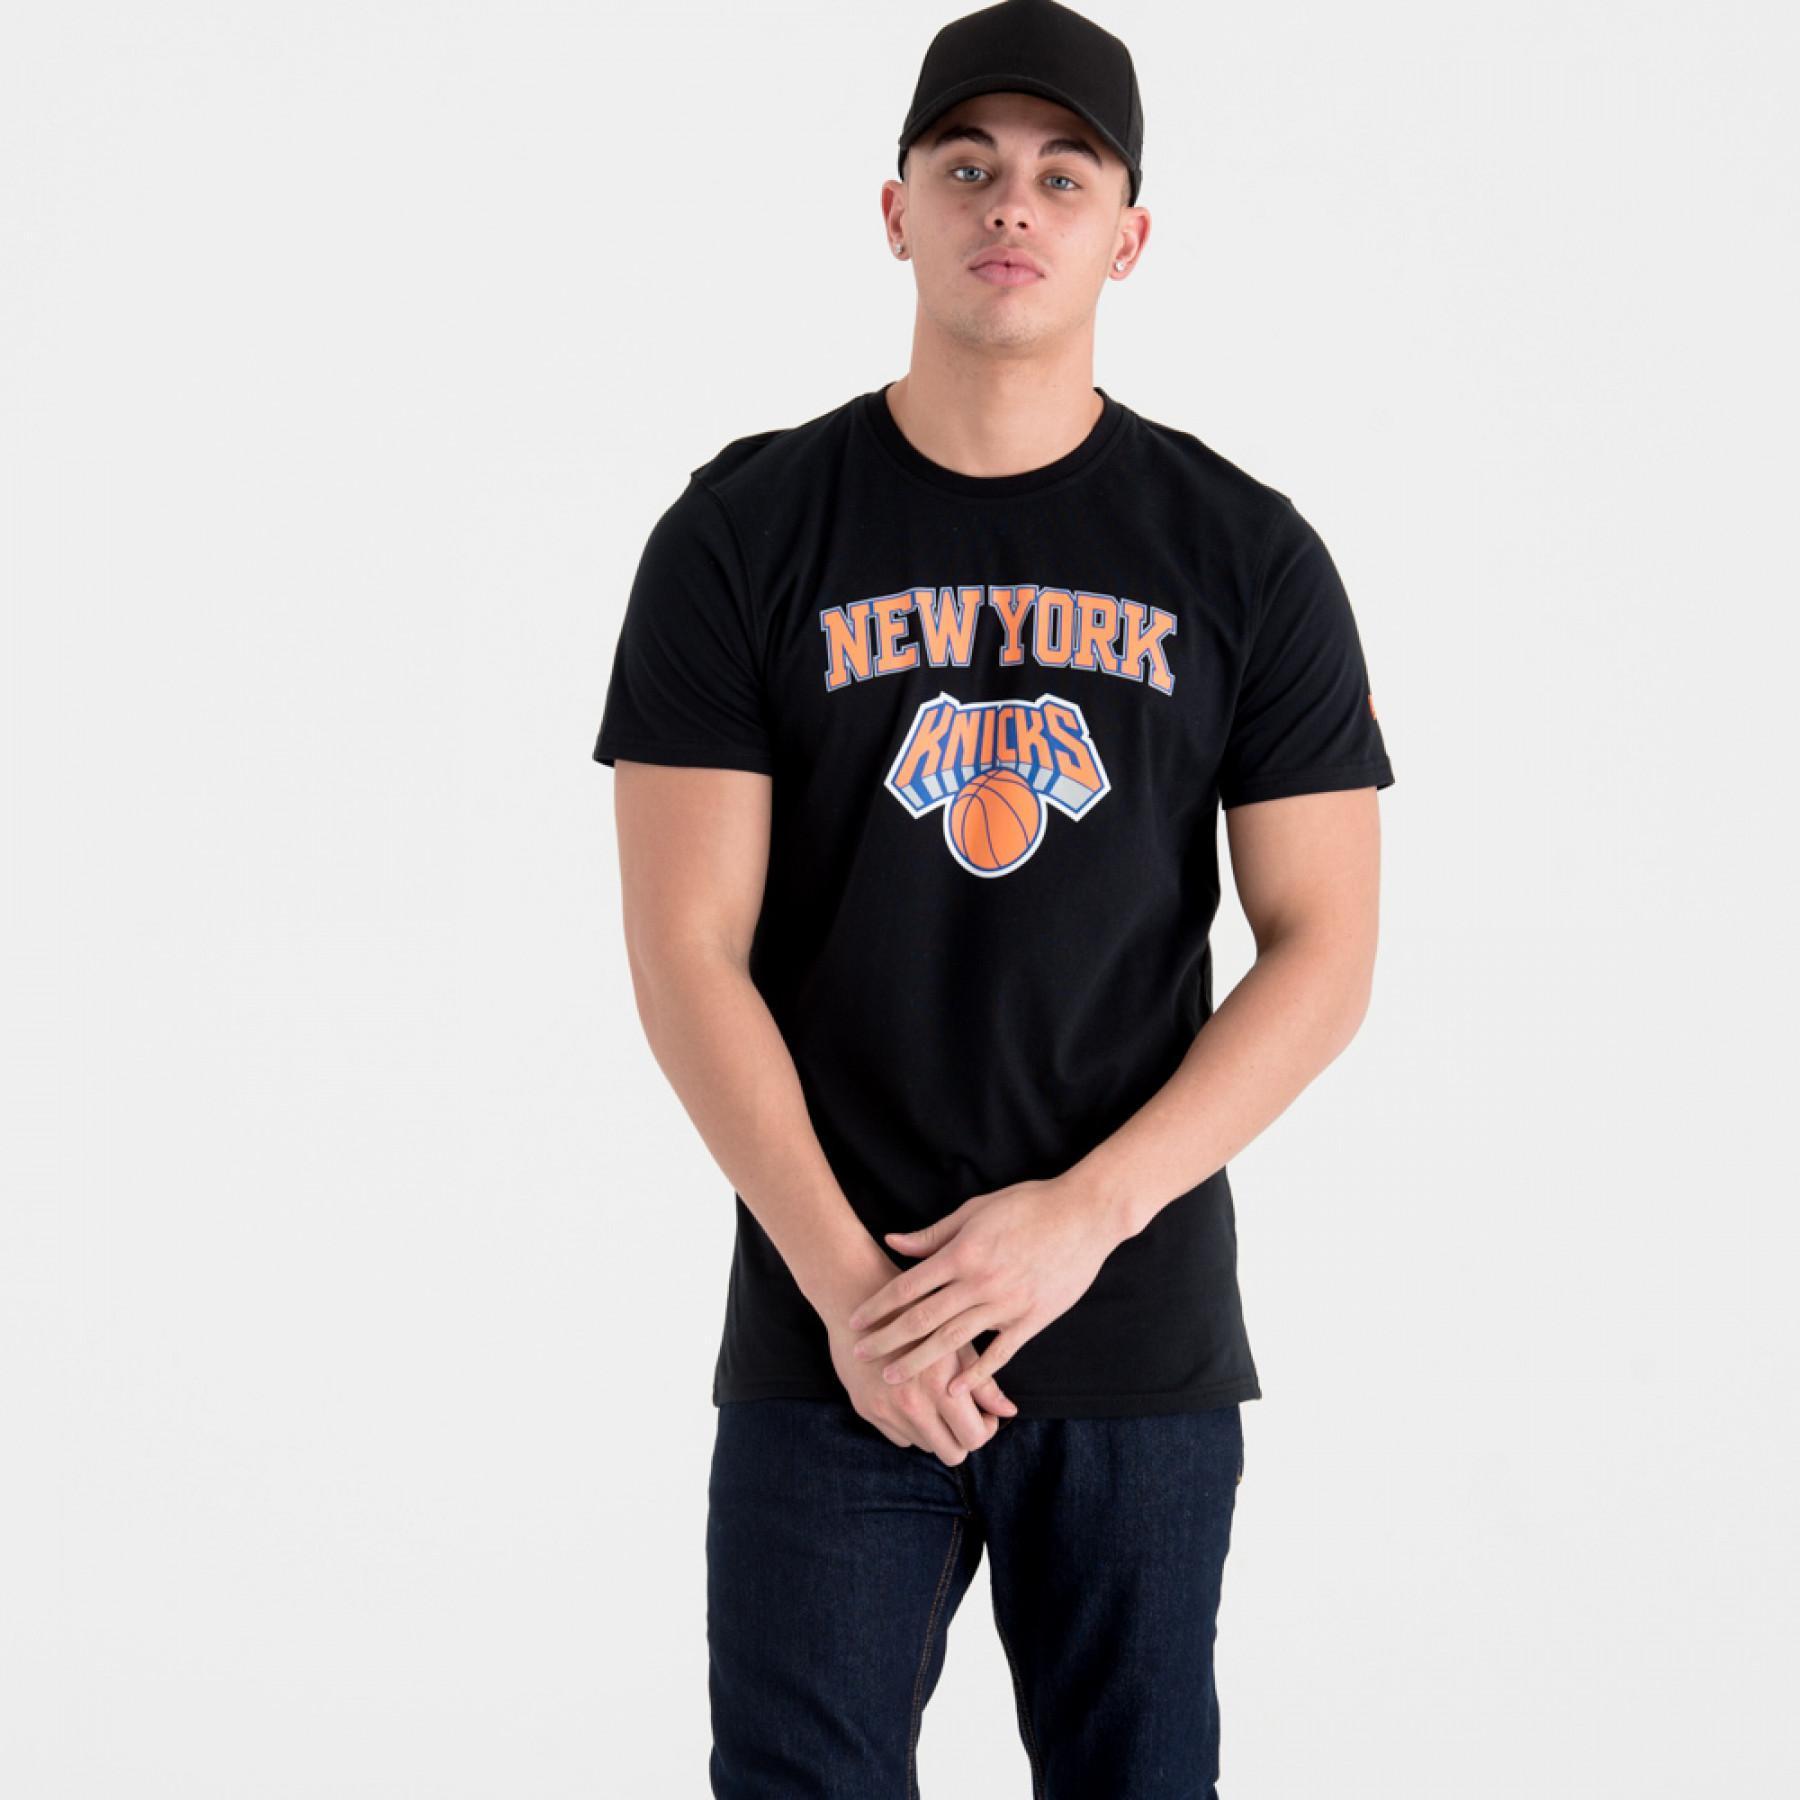  New EraT - s h i r t   logo New York Knicks